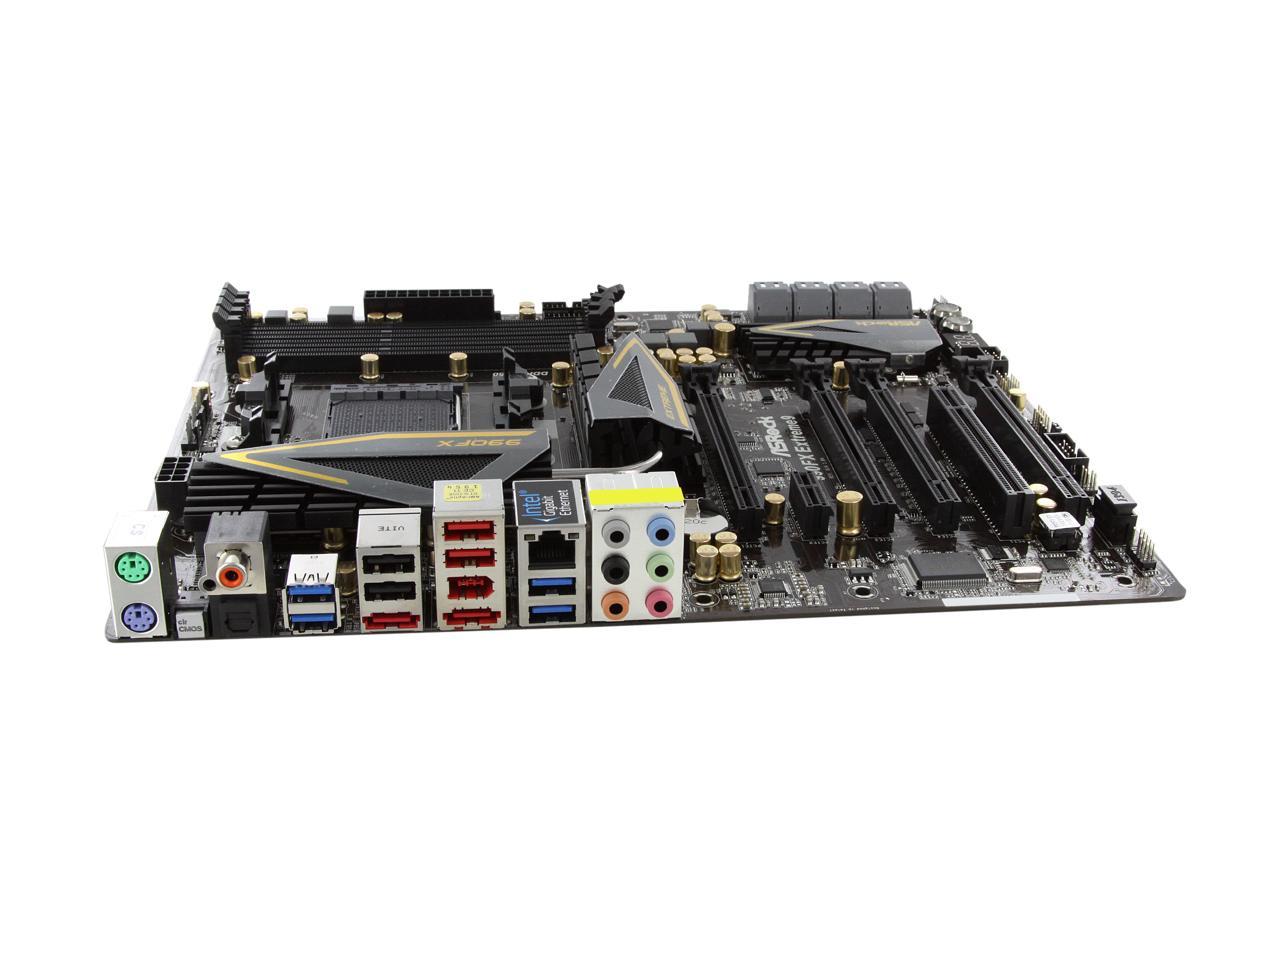 ASRock 990FX Extreme9 AM3+ ATX AMD Motherboard with UEFI BIOS - Newegg.com